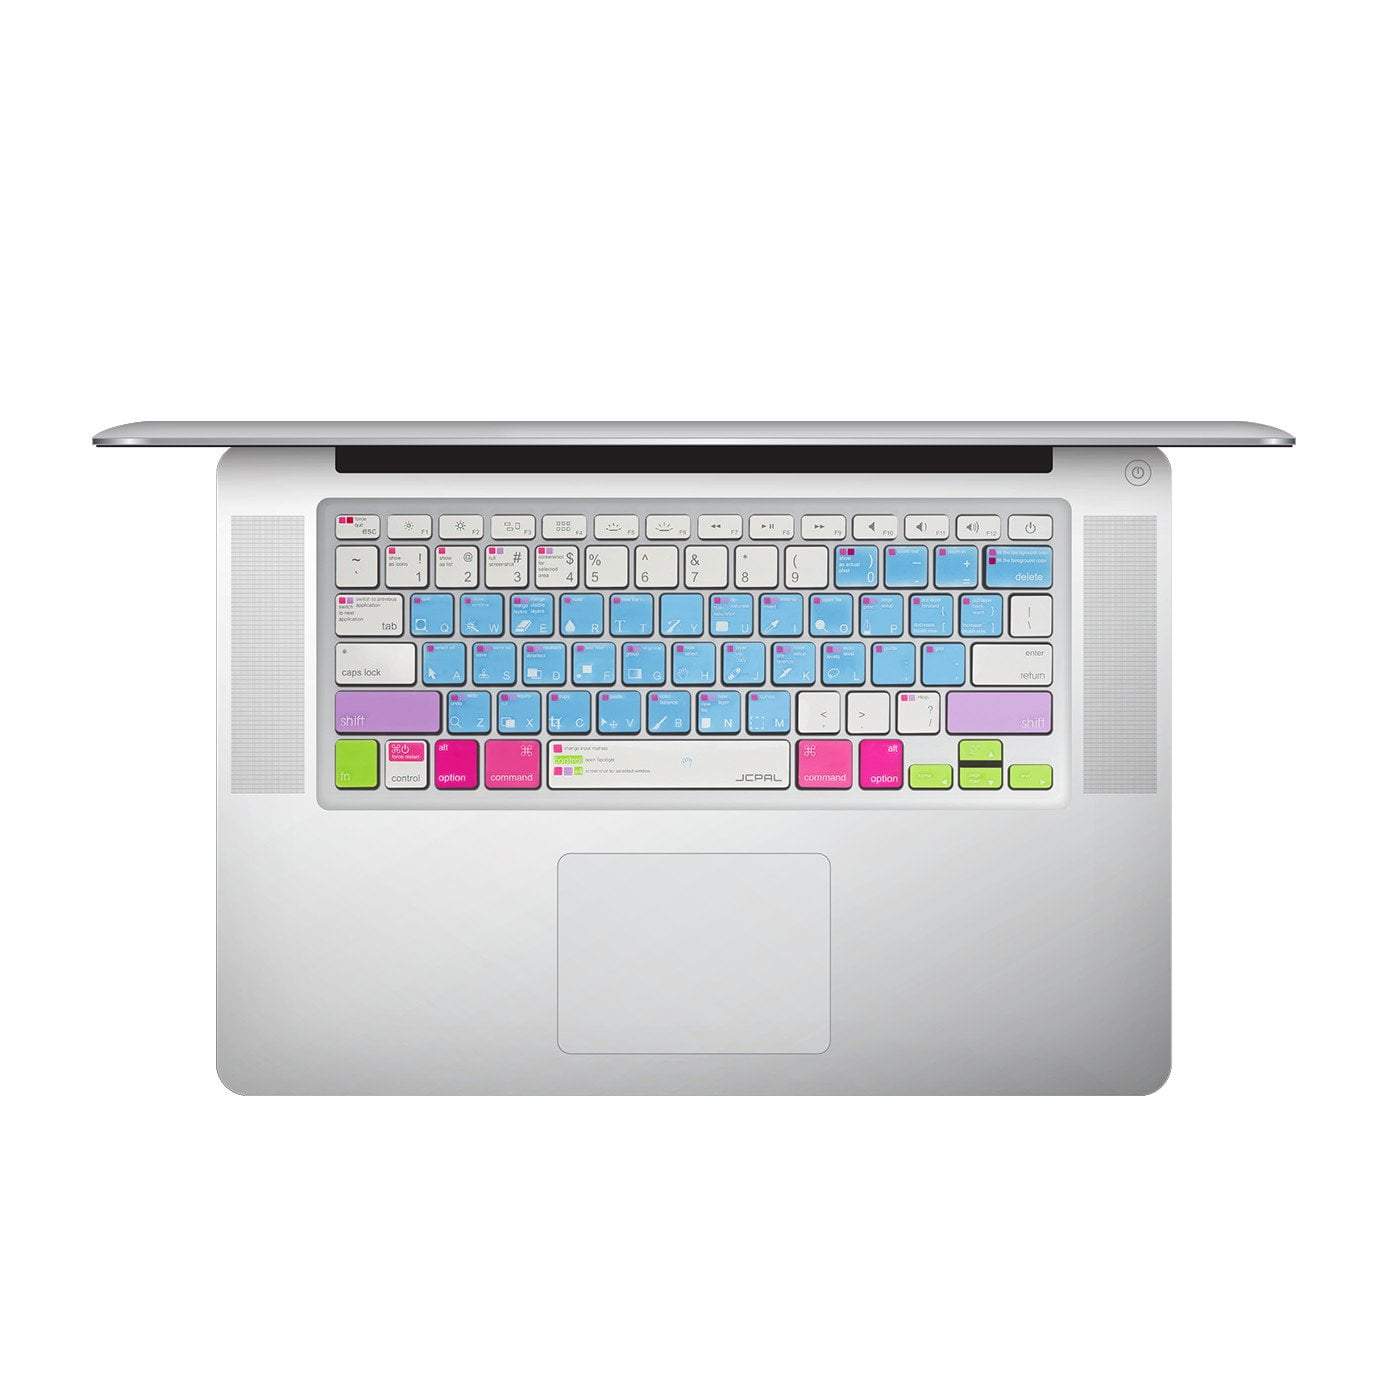 JCPal Unavailable VerSkin Photoshop Shortcut Keyboard Protector (US-Layout) MacBook Pro 13"/15"/17" - Air 13" - Wireless Keyboard